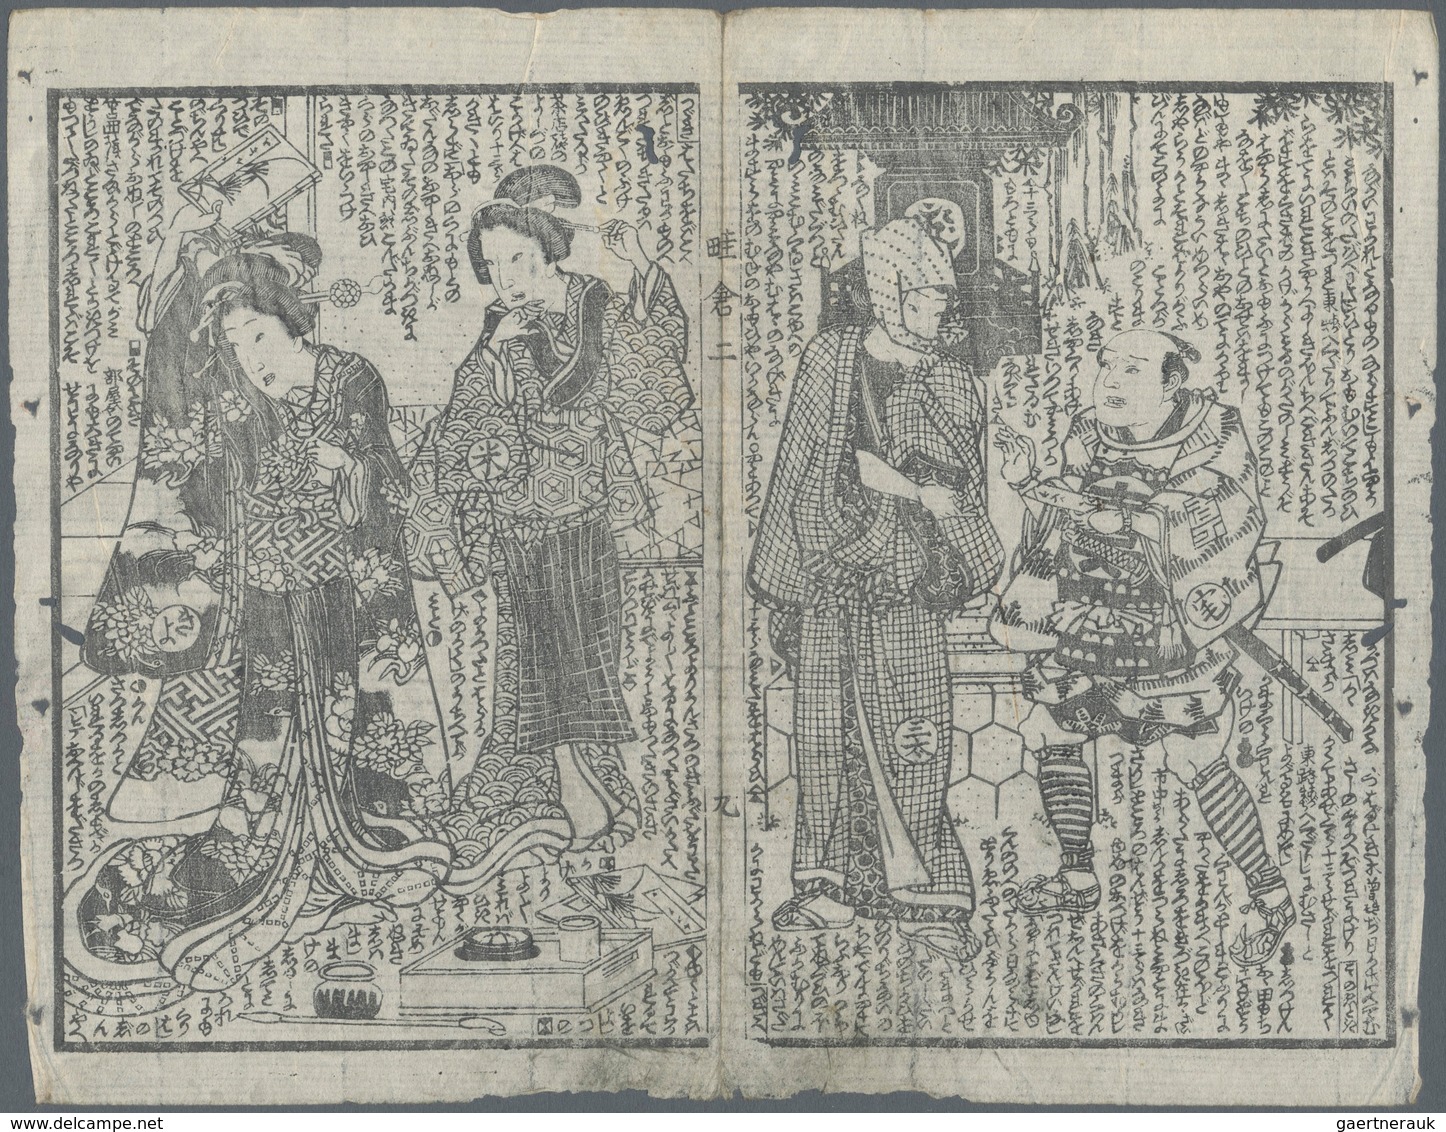 Japan - Besonderheiten: 1790/1890, japanese woodcuts and books, total 33 woodcuts/drawings on native